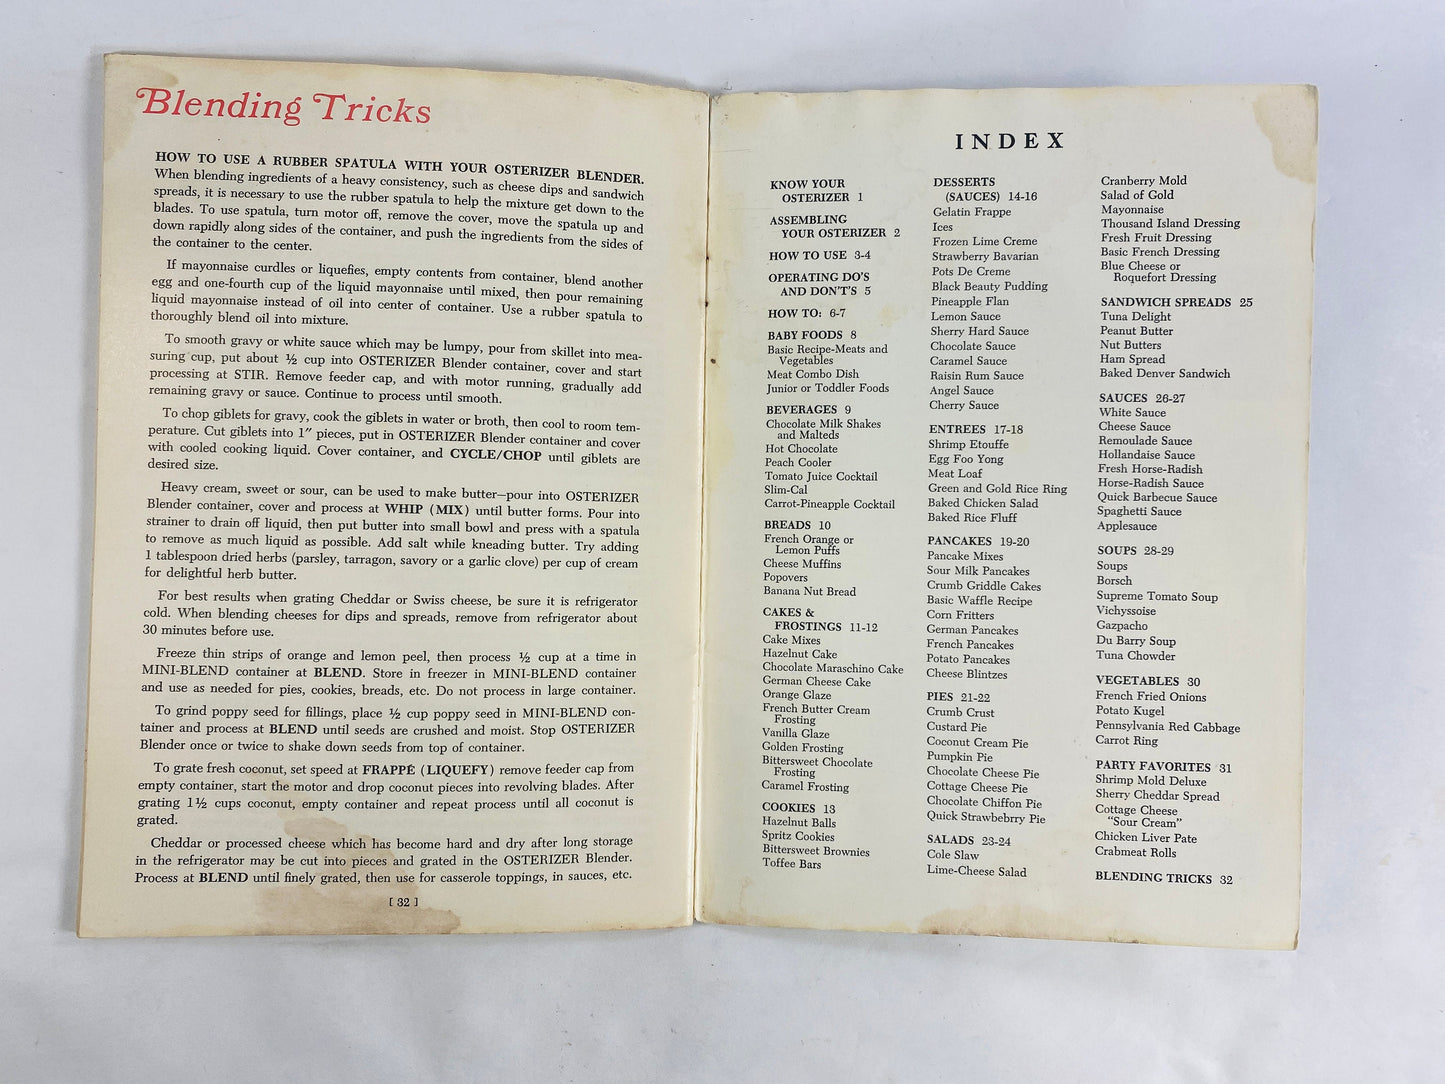 1973 Oster ORIGINAL Osterizer Vintage booklet of recipes. Retro blender kitchen tricks, do's & don'ts spin cookery. 1970s cookbook